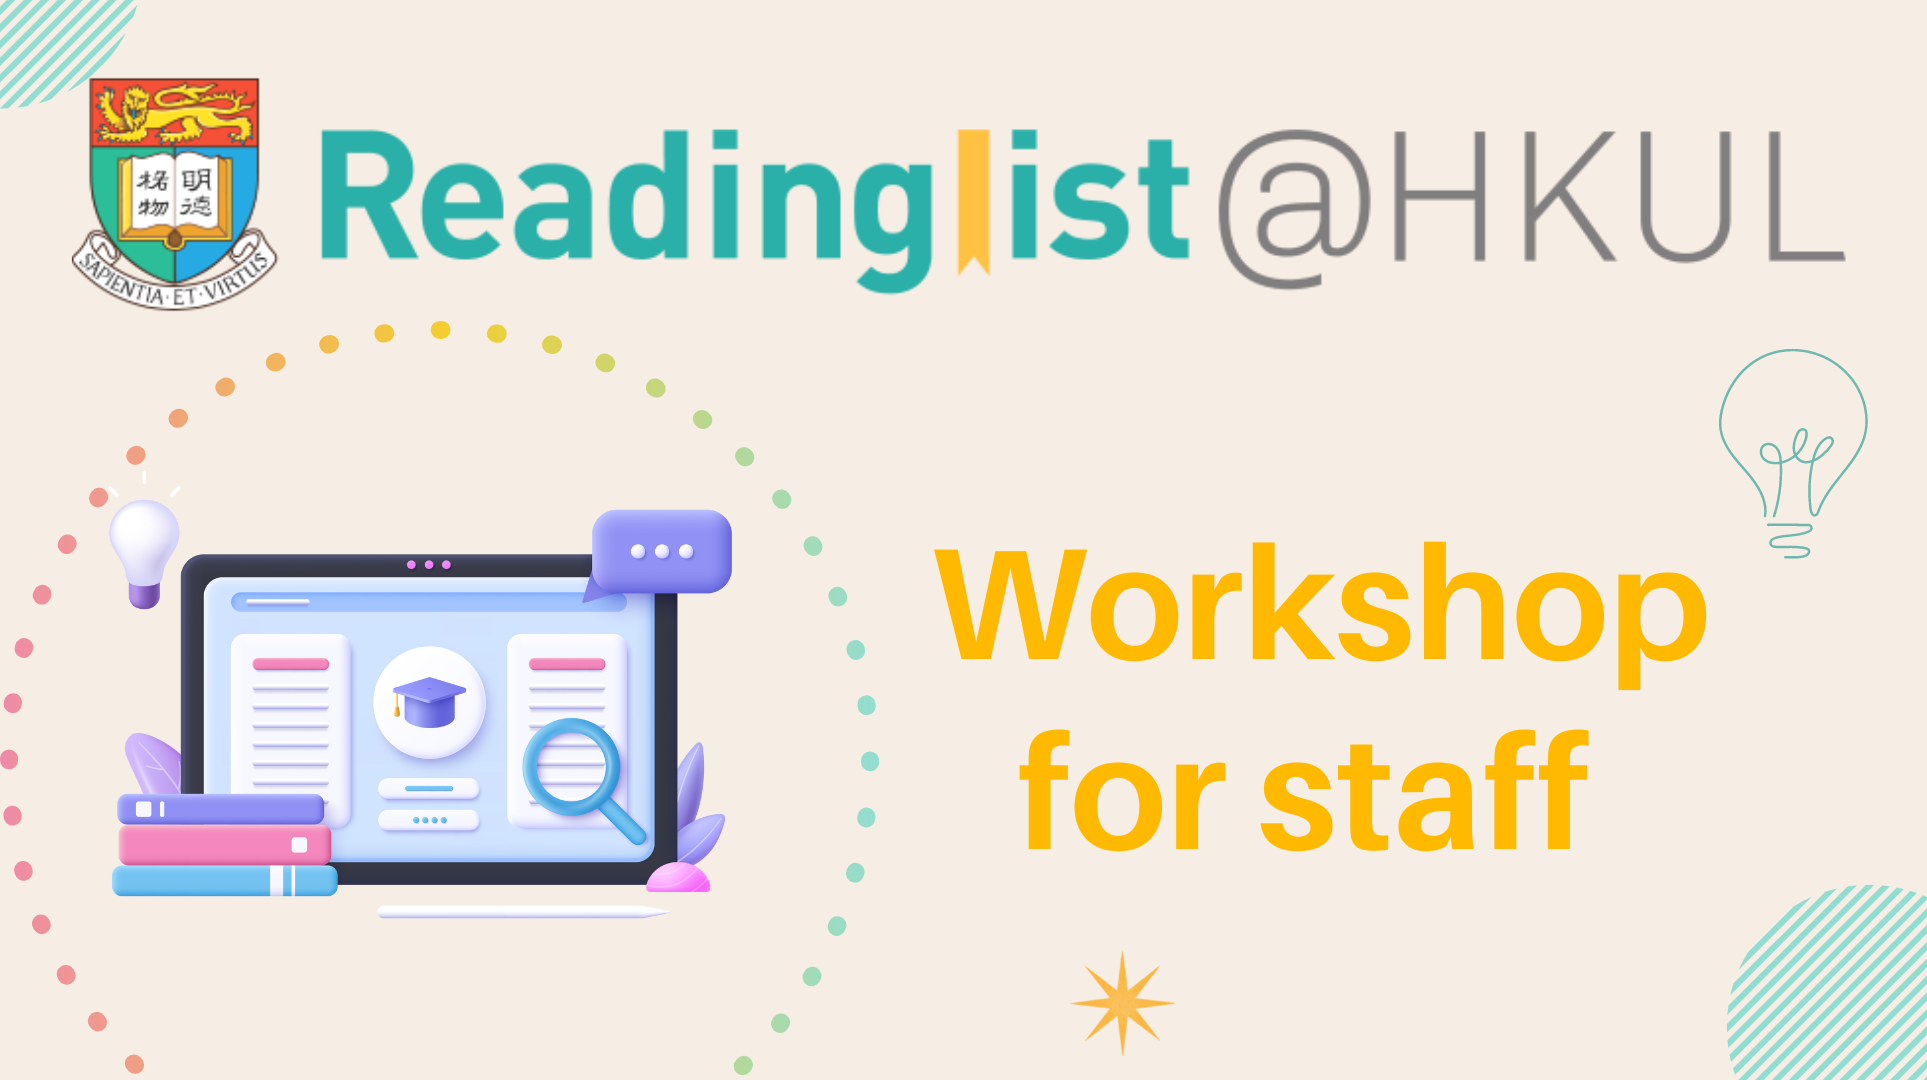 ReadingList@HKUL Workshop for staff